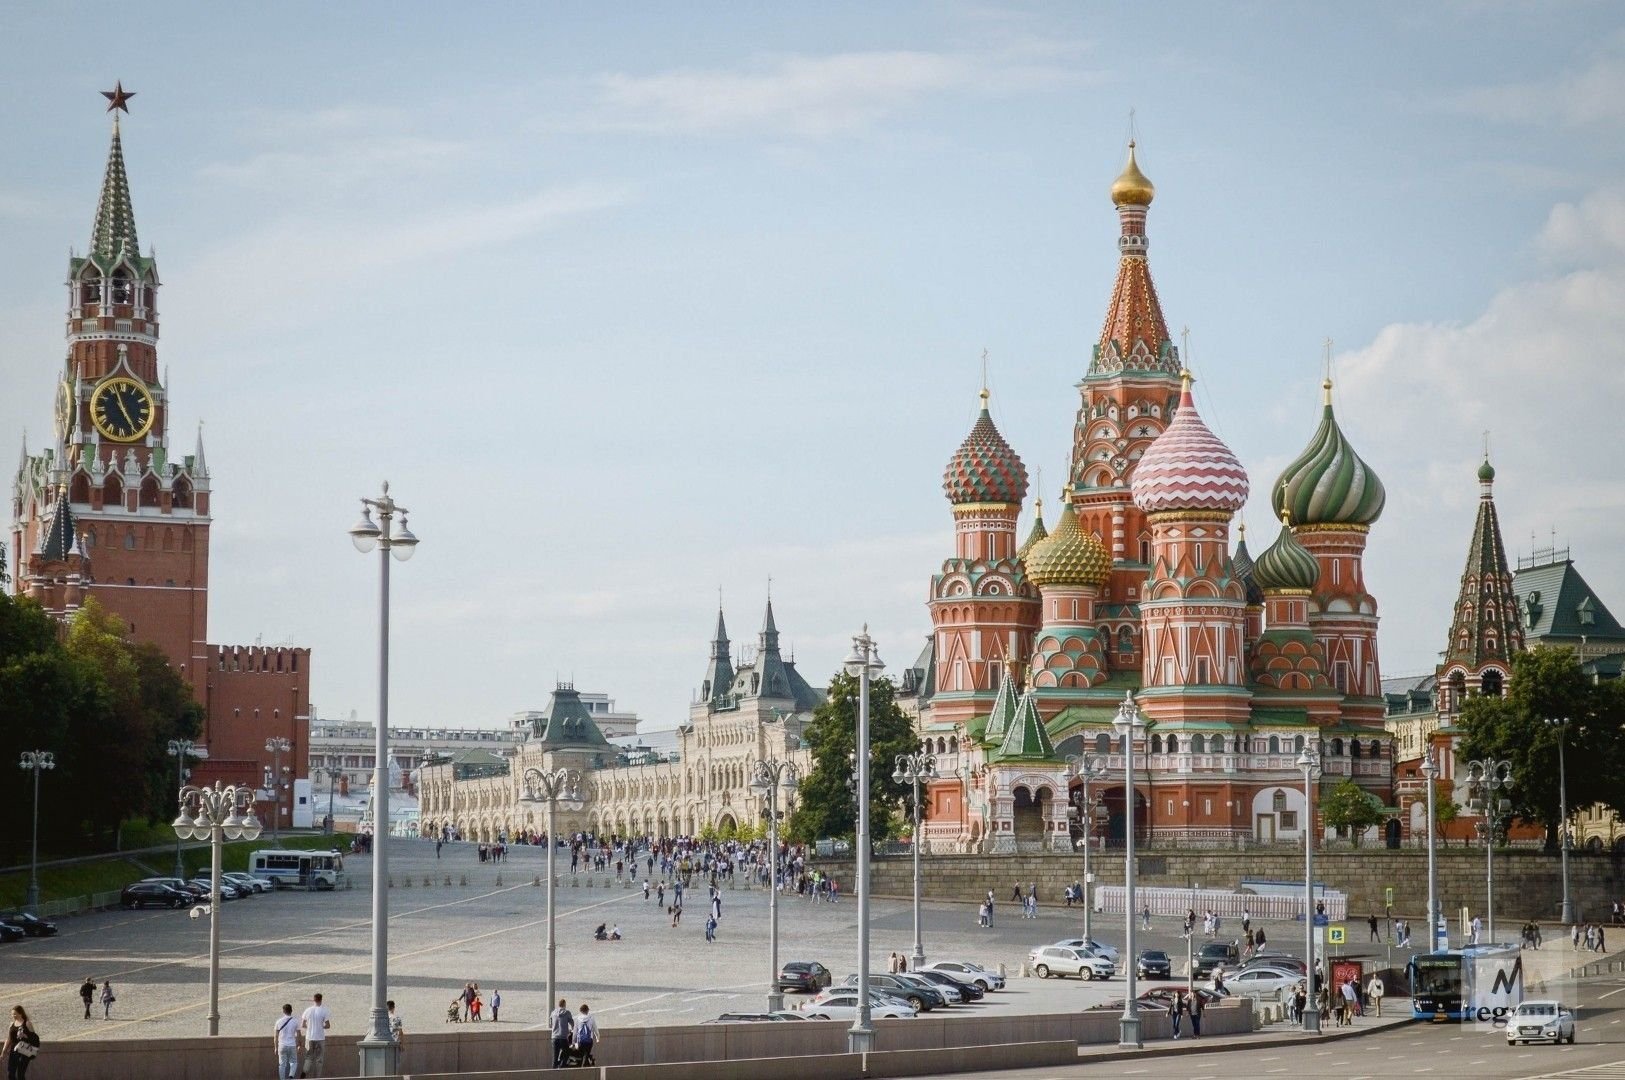 фото церкви на красной площади